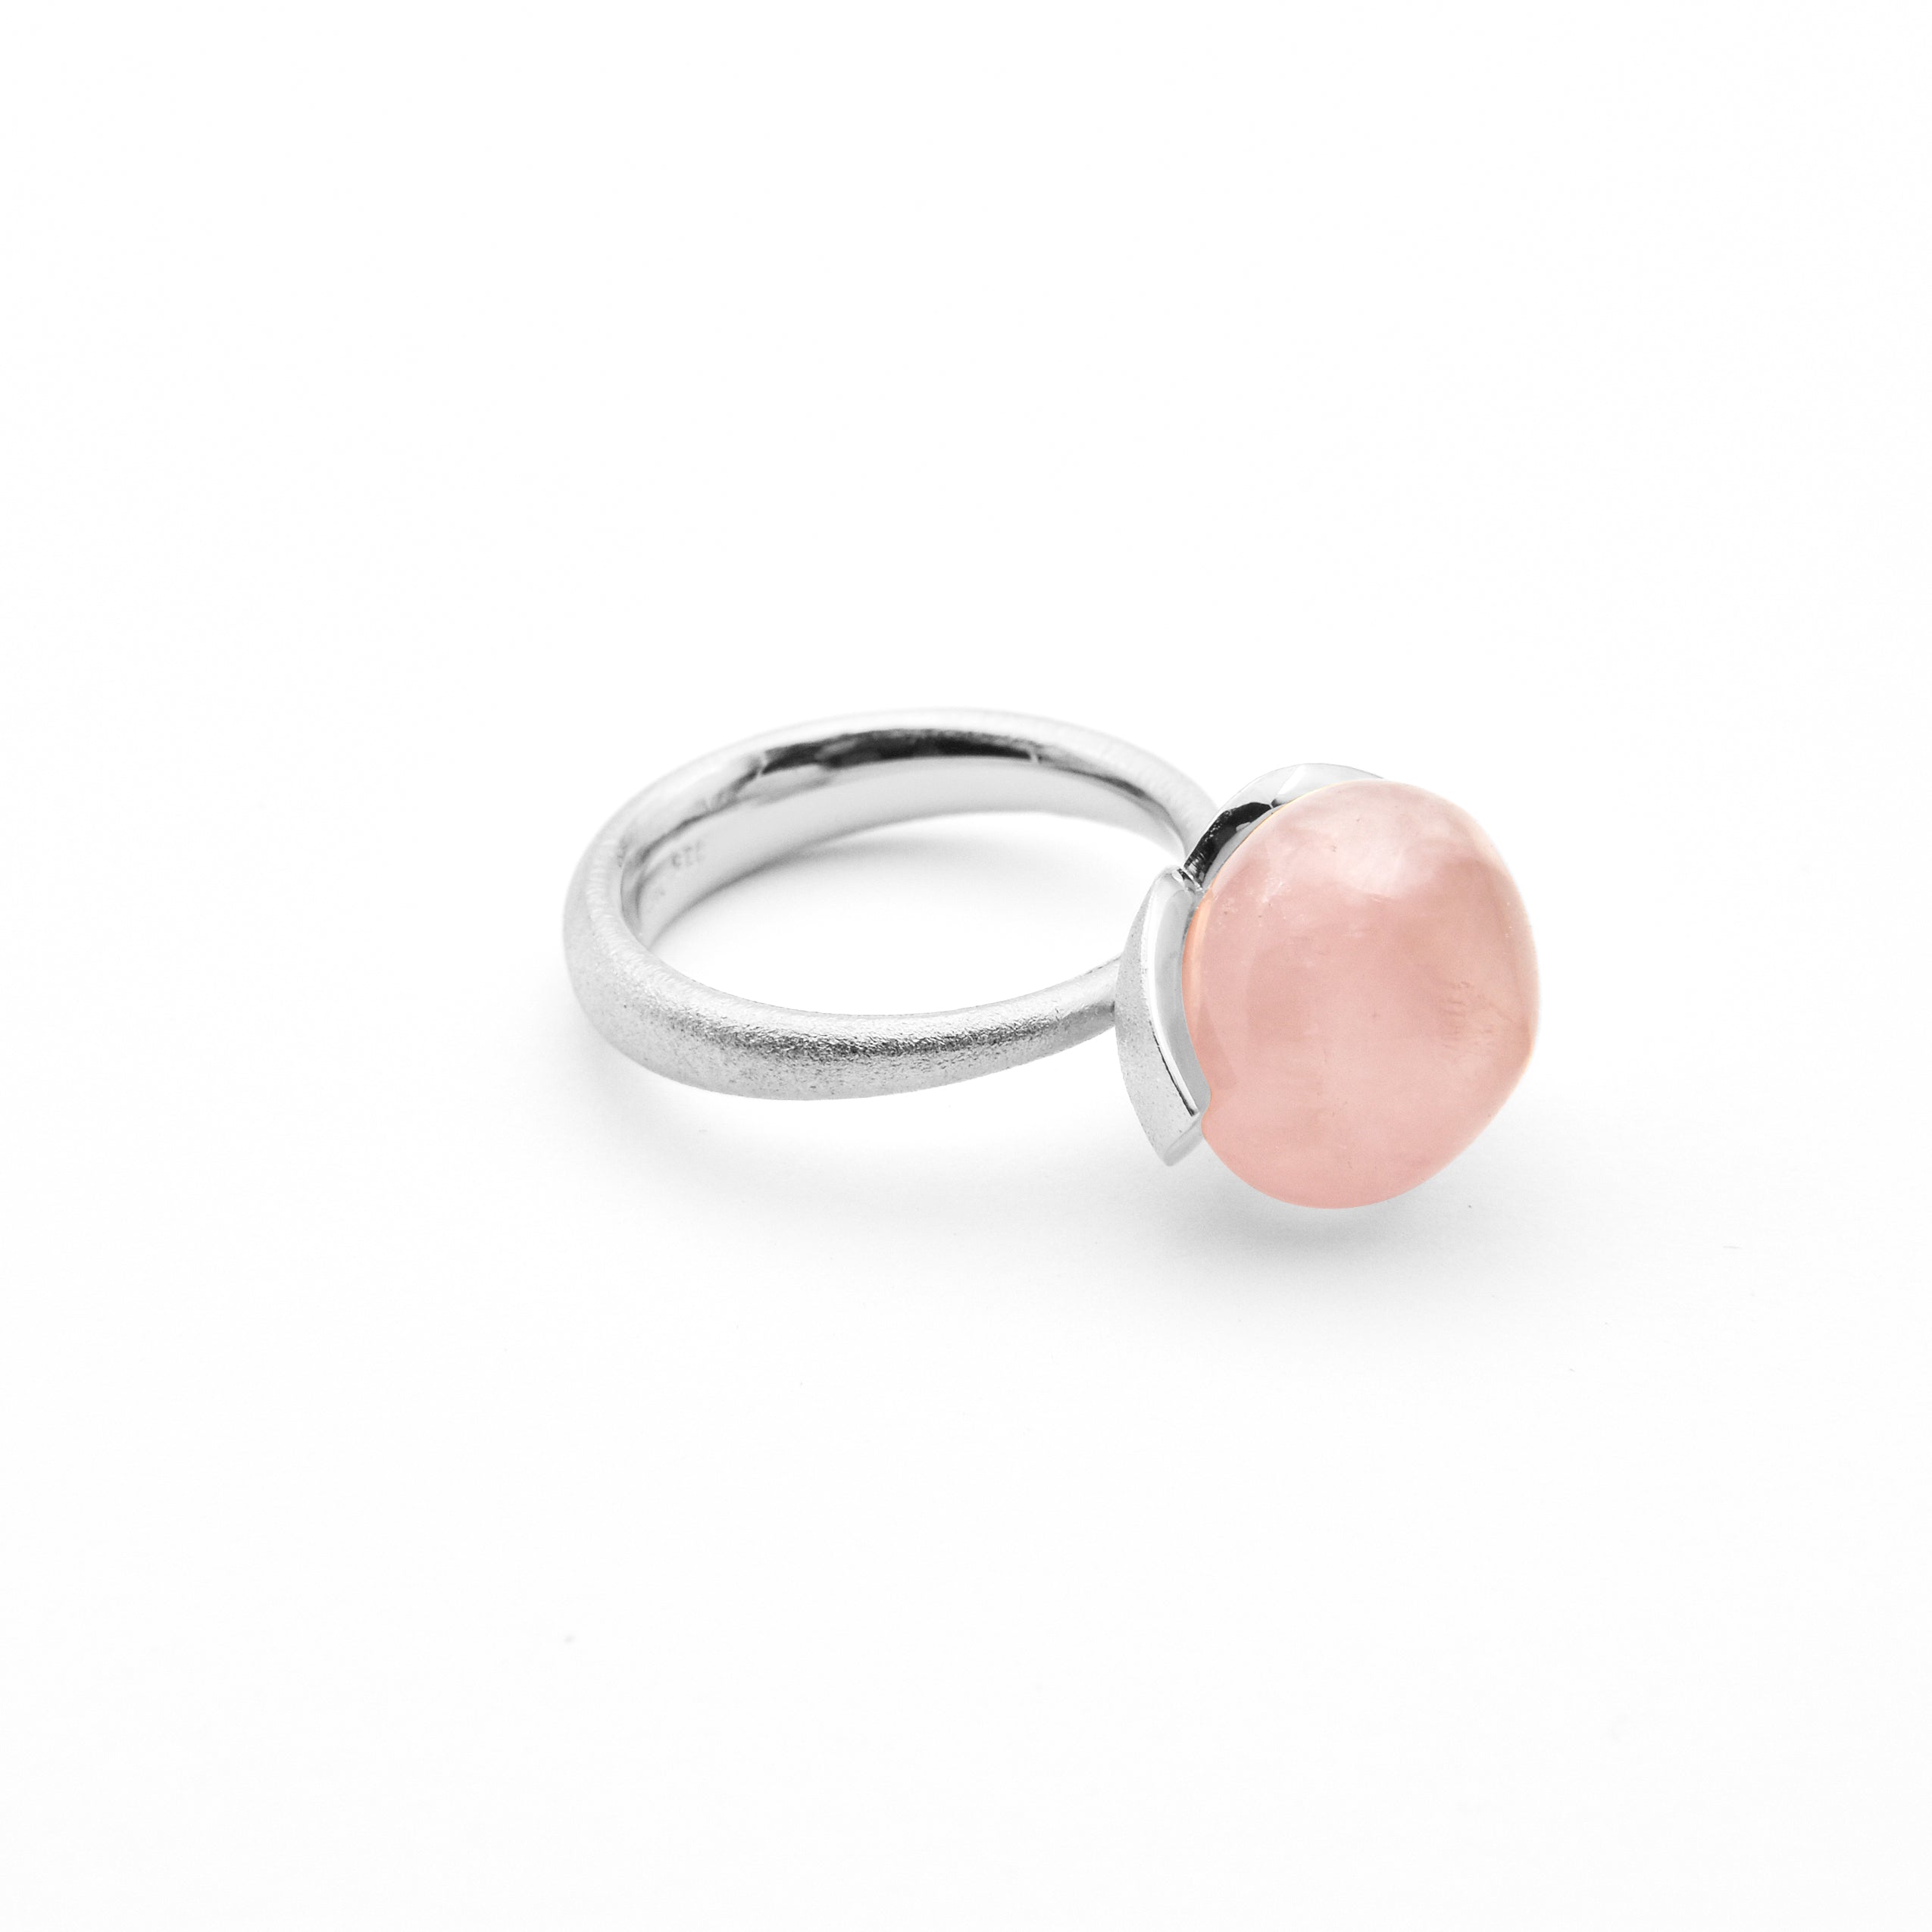 Dolce ring "big" with rose quartz 925/-